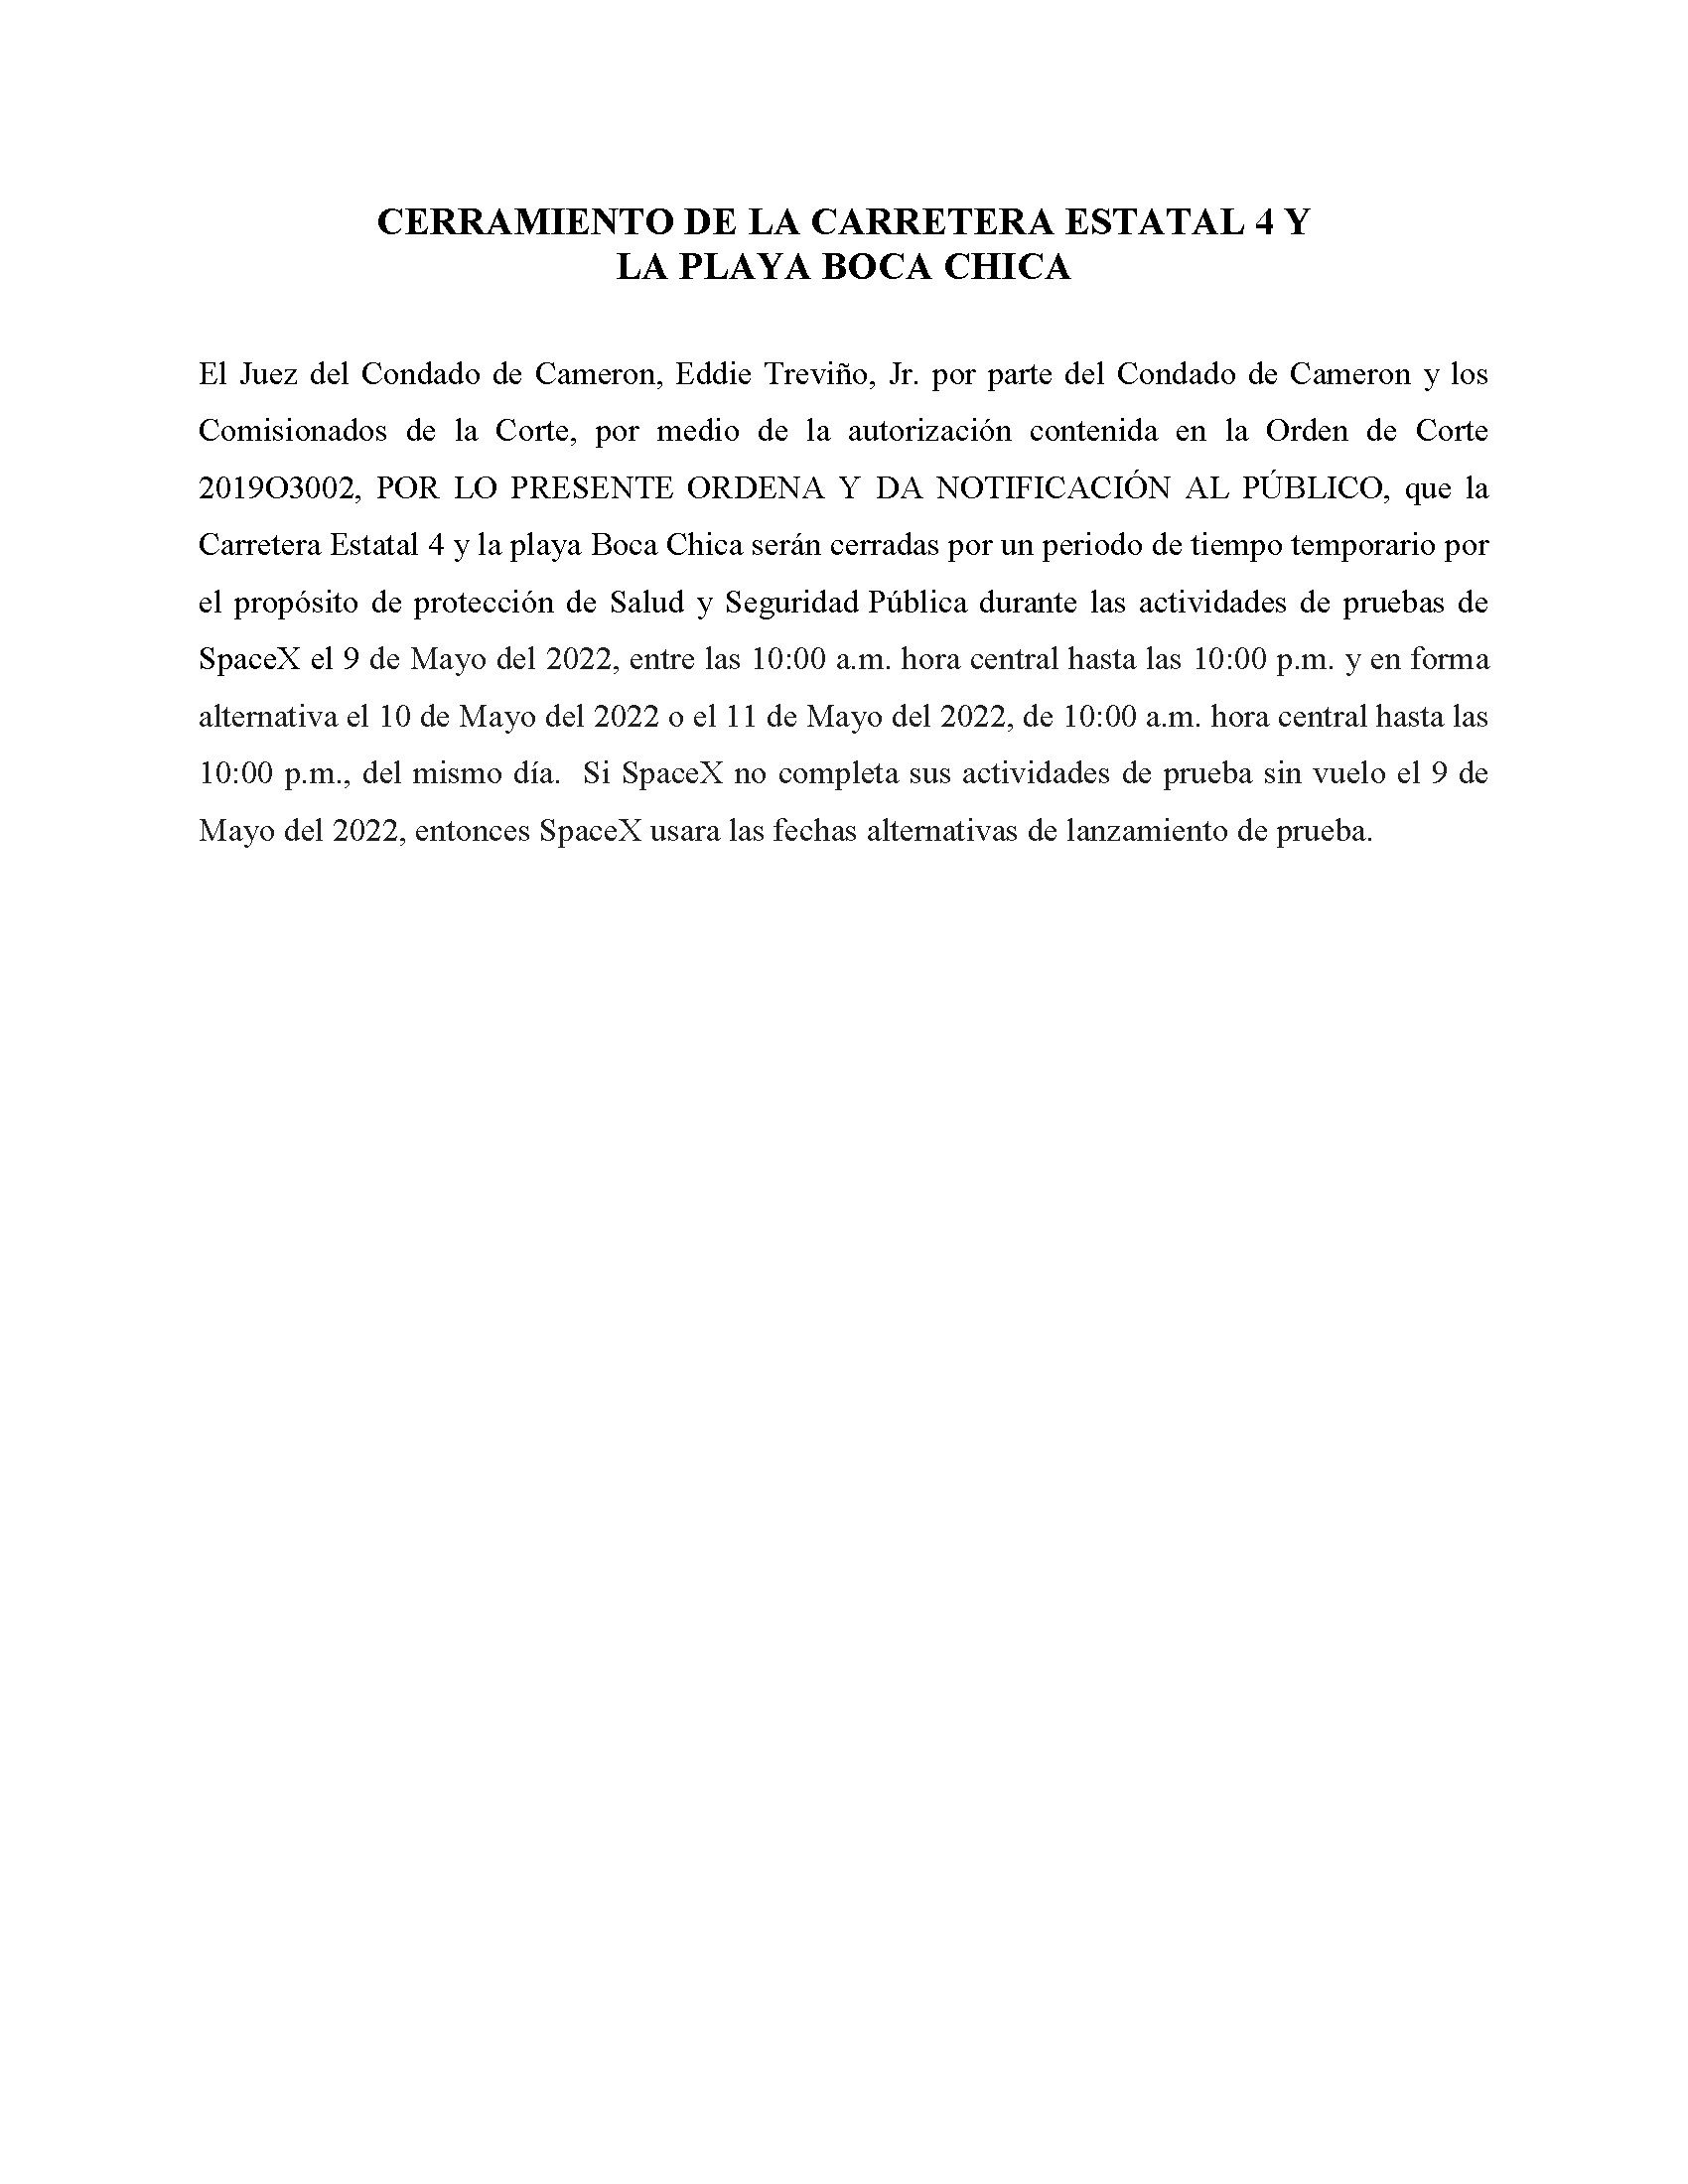 ORDER.CLOSURE OF HIGHWAY 4 Y LA PLAYA BOCA CHICA.SPANISH.05.09.2022